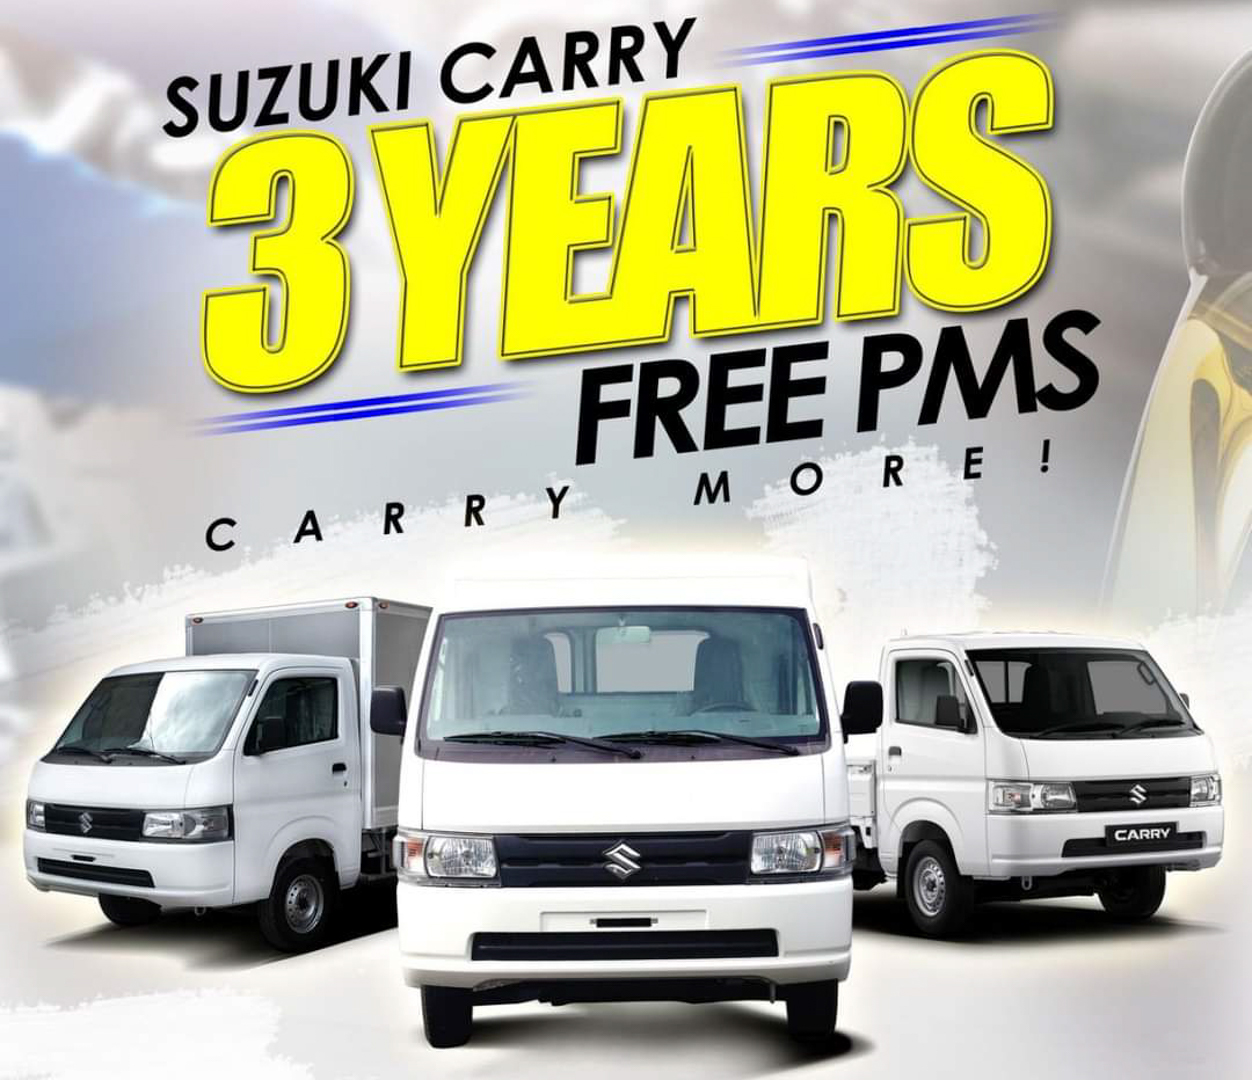 Suzuki Philippines rolls out sweet new deal for its Suzuki Carry